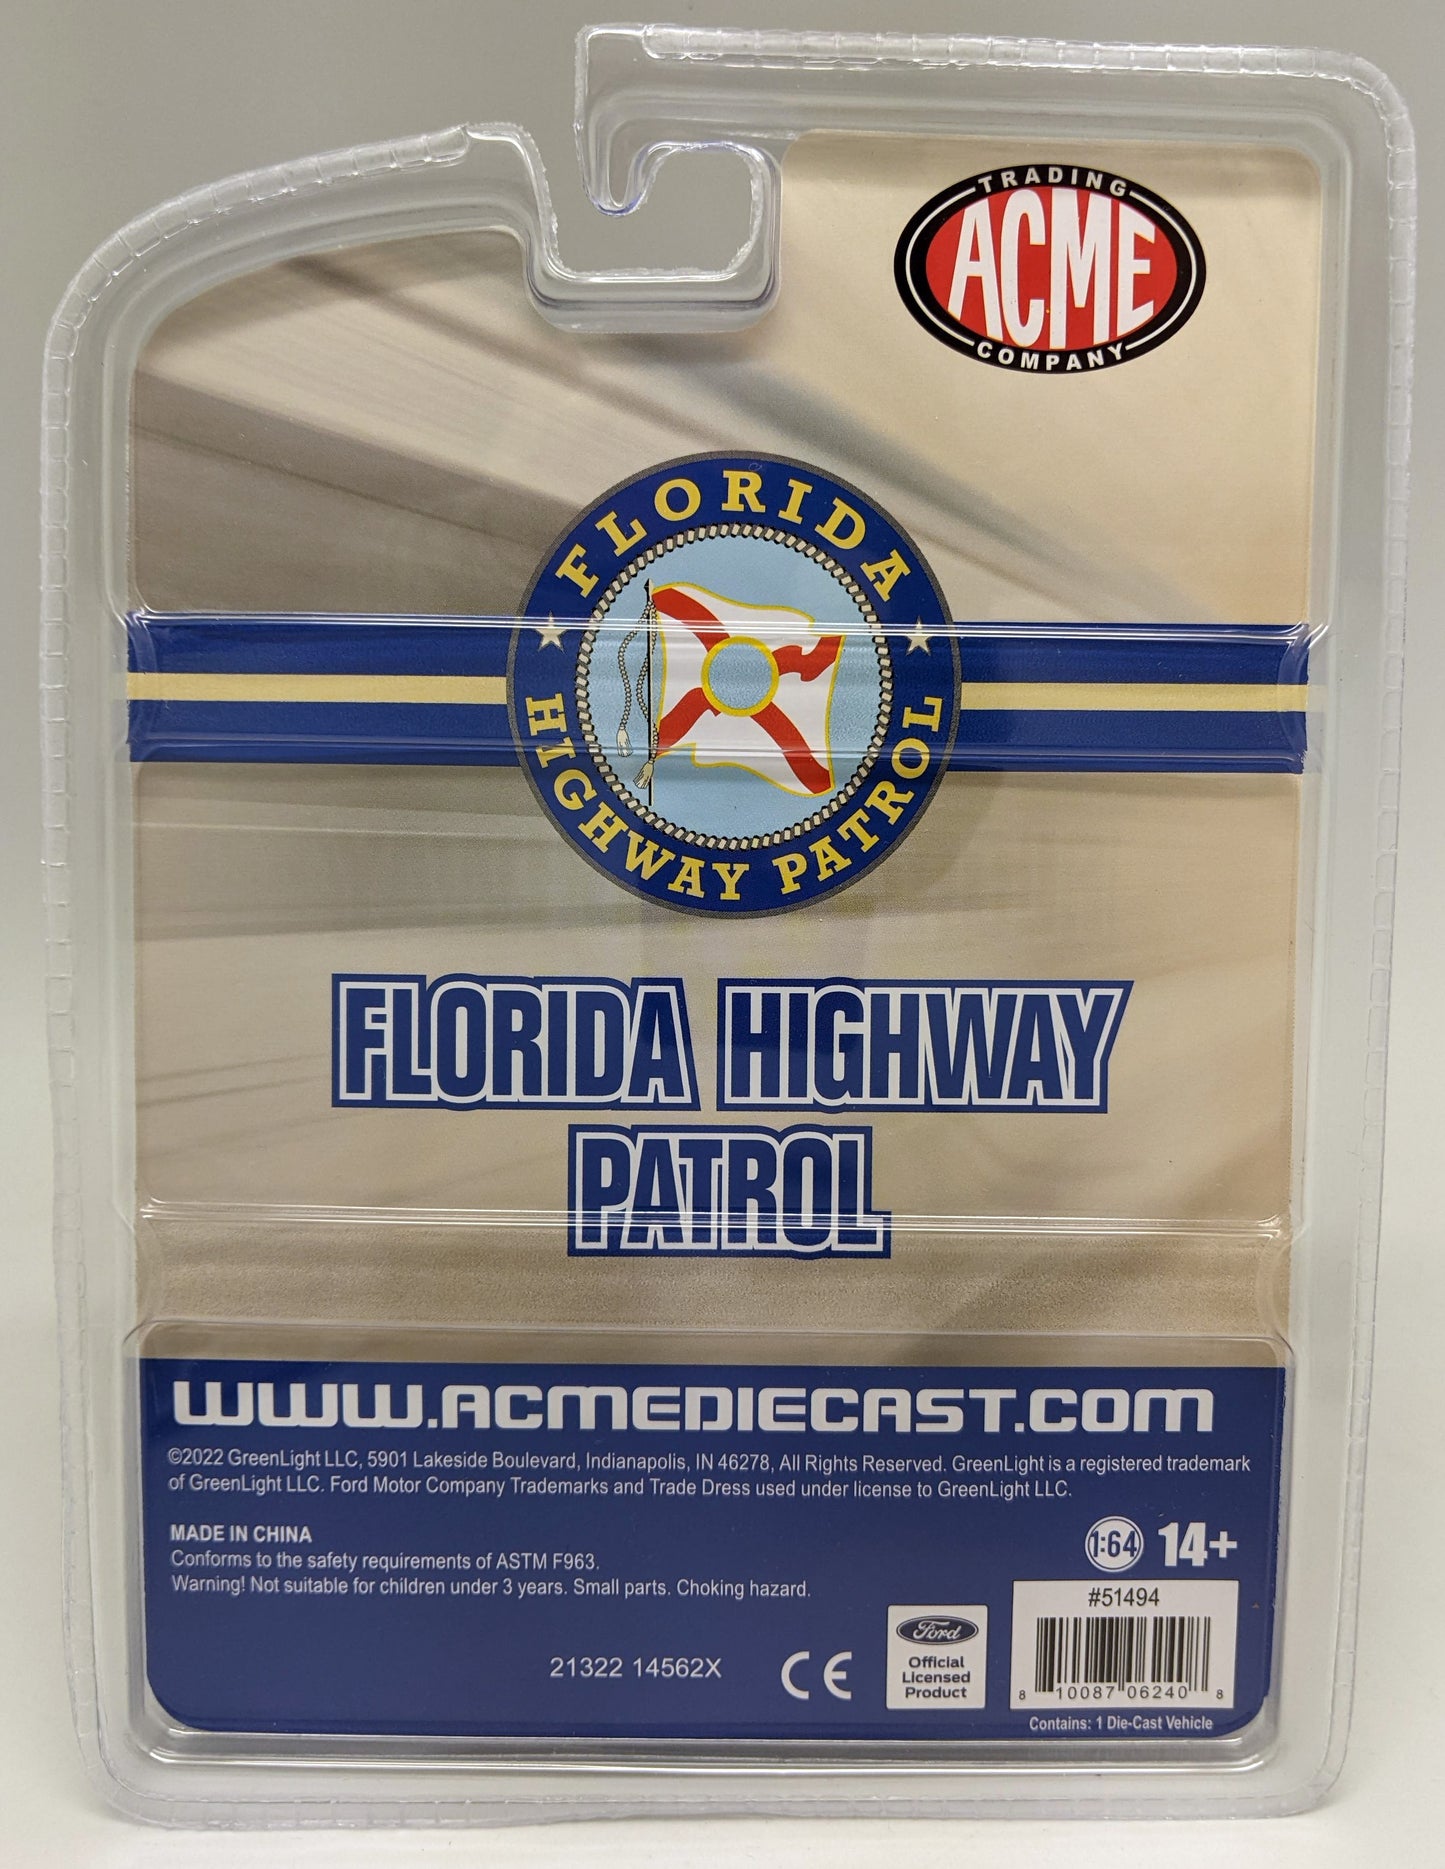 ACME - 1991 Ford Mustang SSP - Florida Highway Patrol